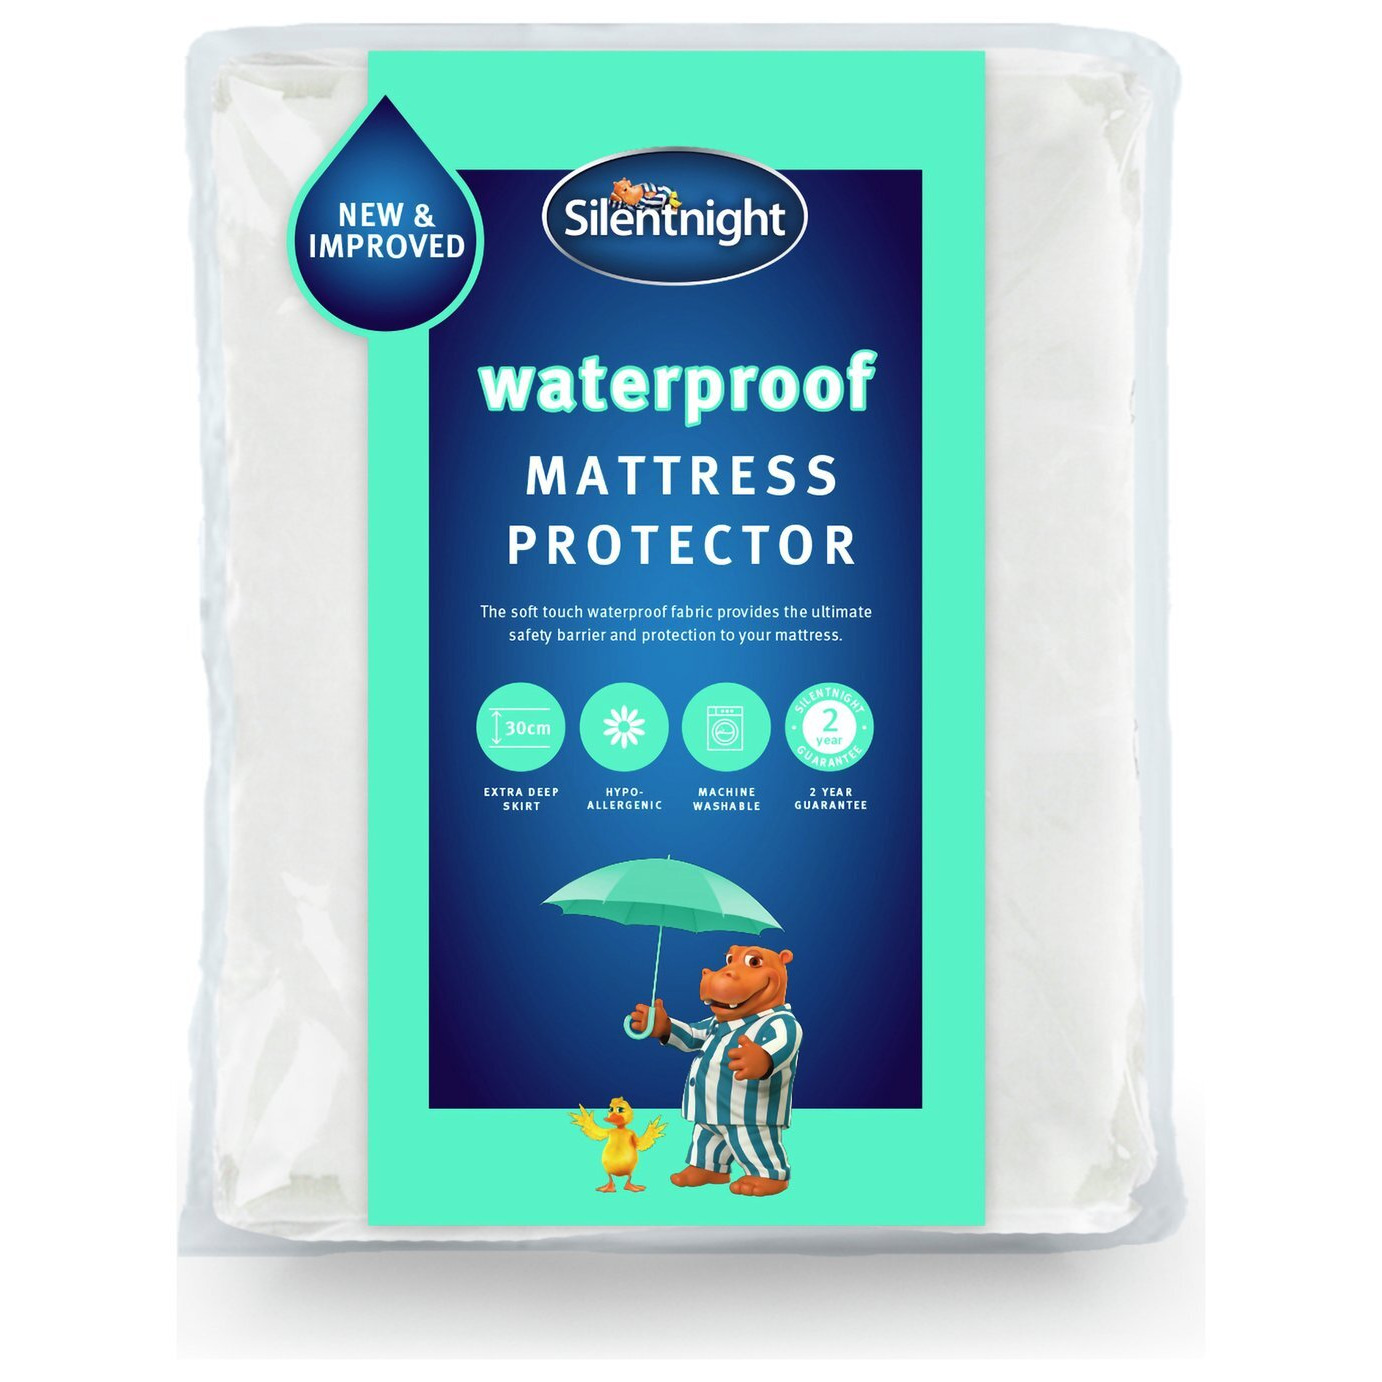 Silentnight Waterproof Mattress Protector - Kingsize - image 1